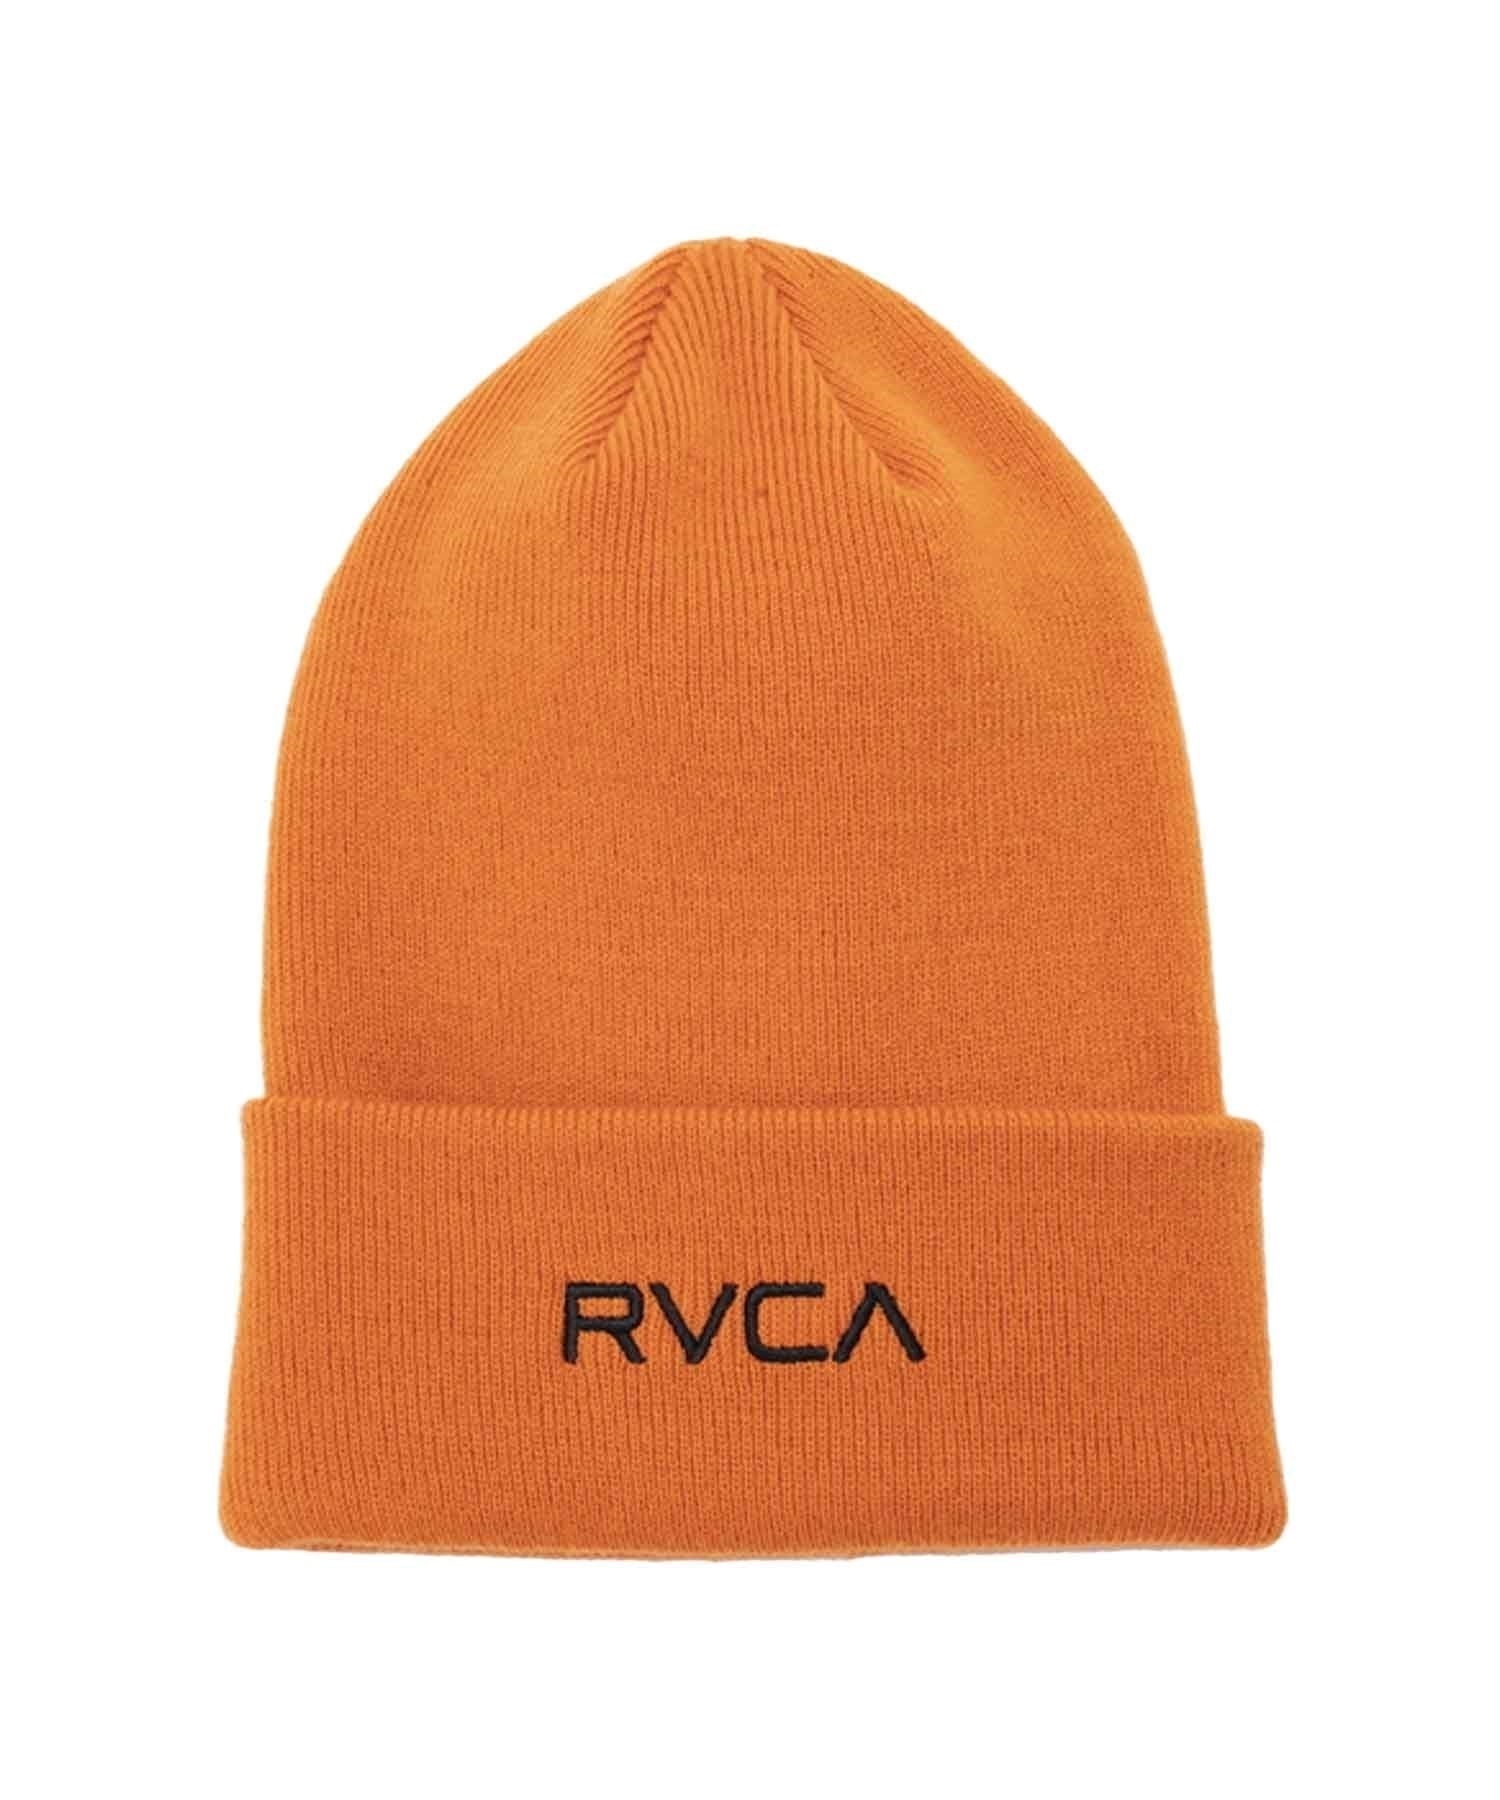 RVCA/ルーカ メンズ ビーニー ニット帽 ダブル DOUBLE FACE BEANIE BD042-965(BLK-FREE)